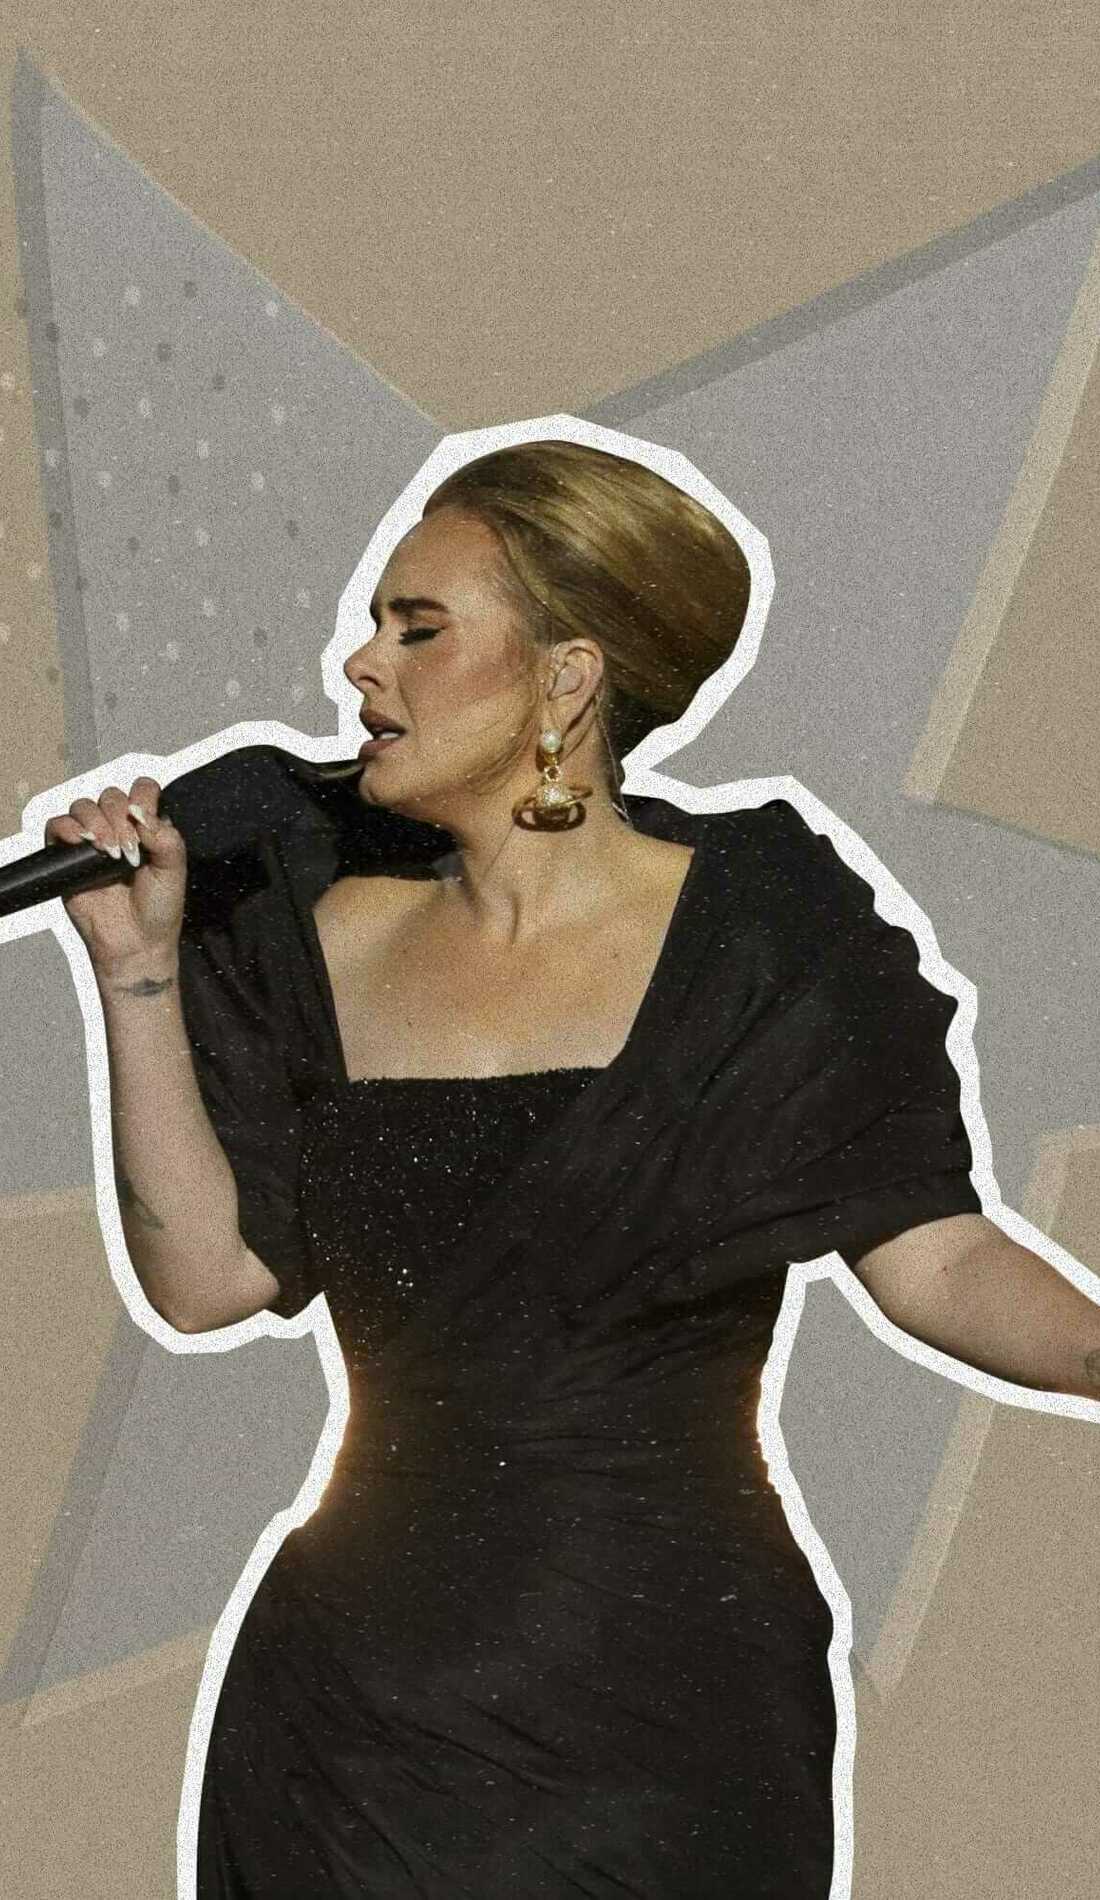 A Adele live event